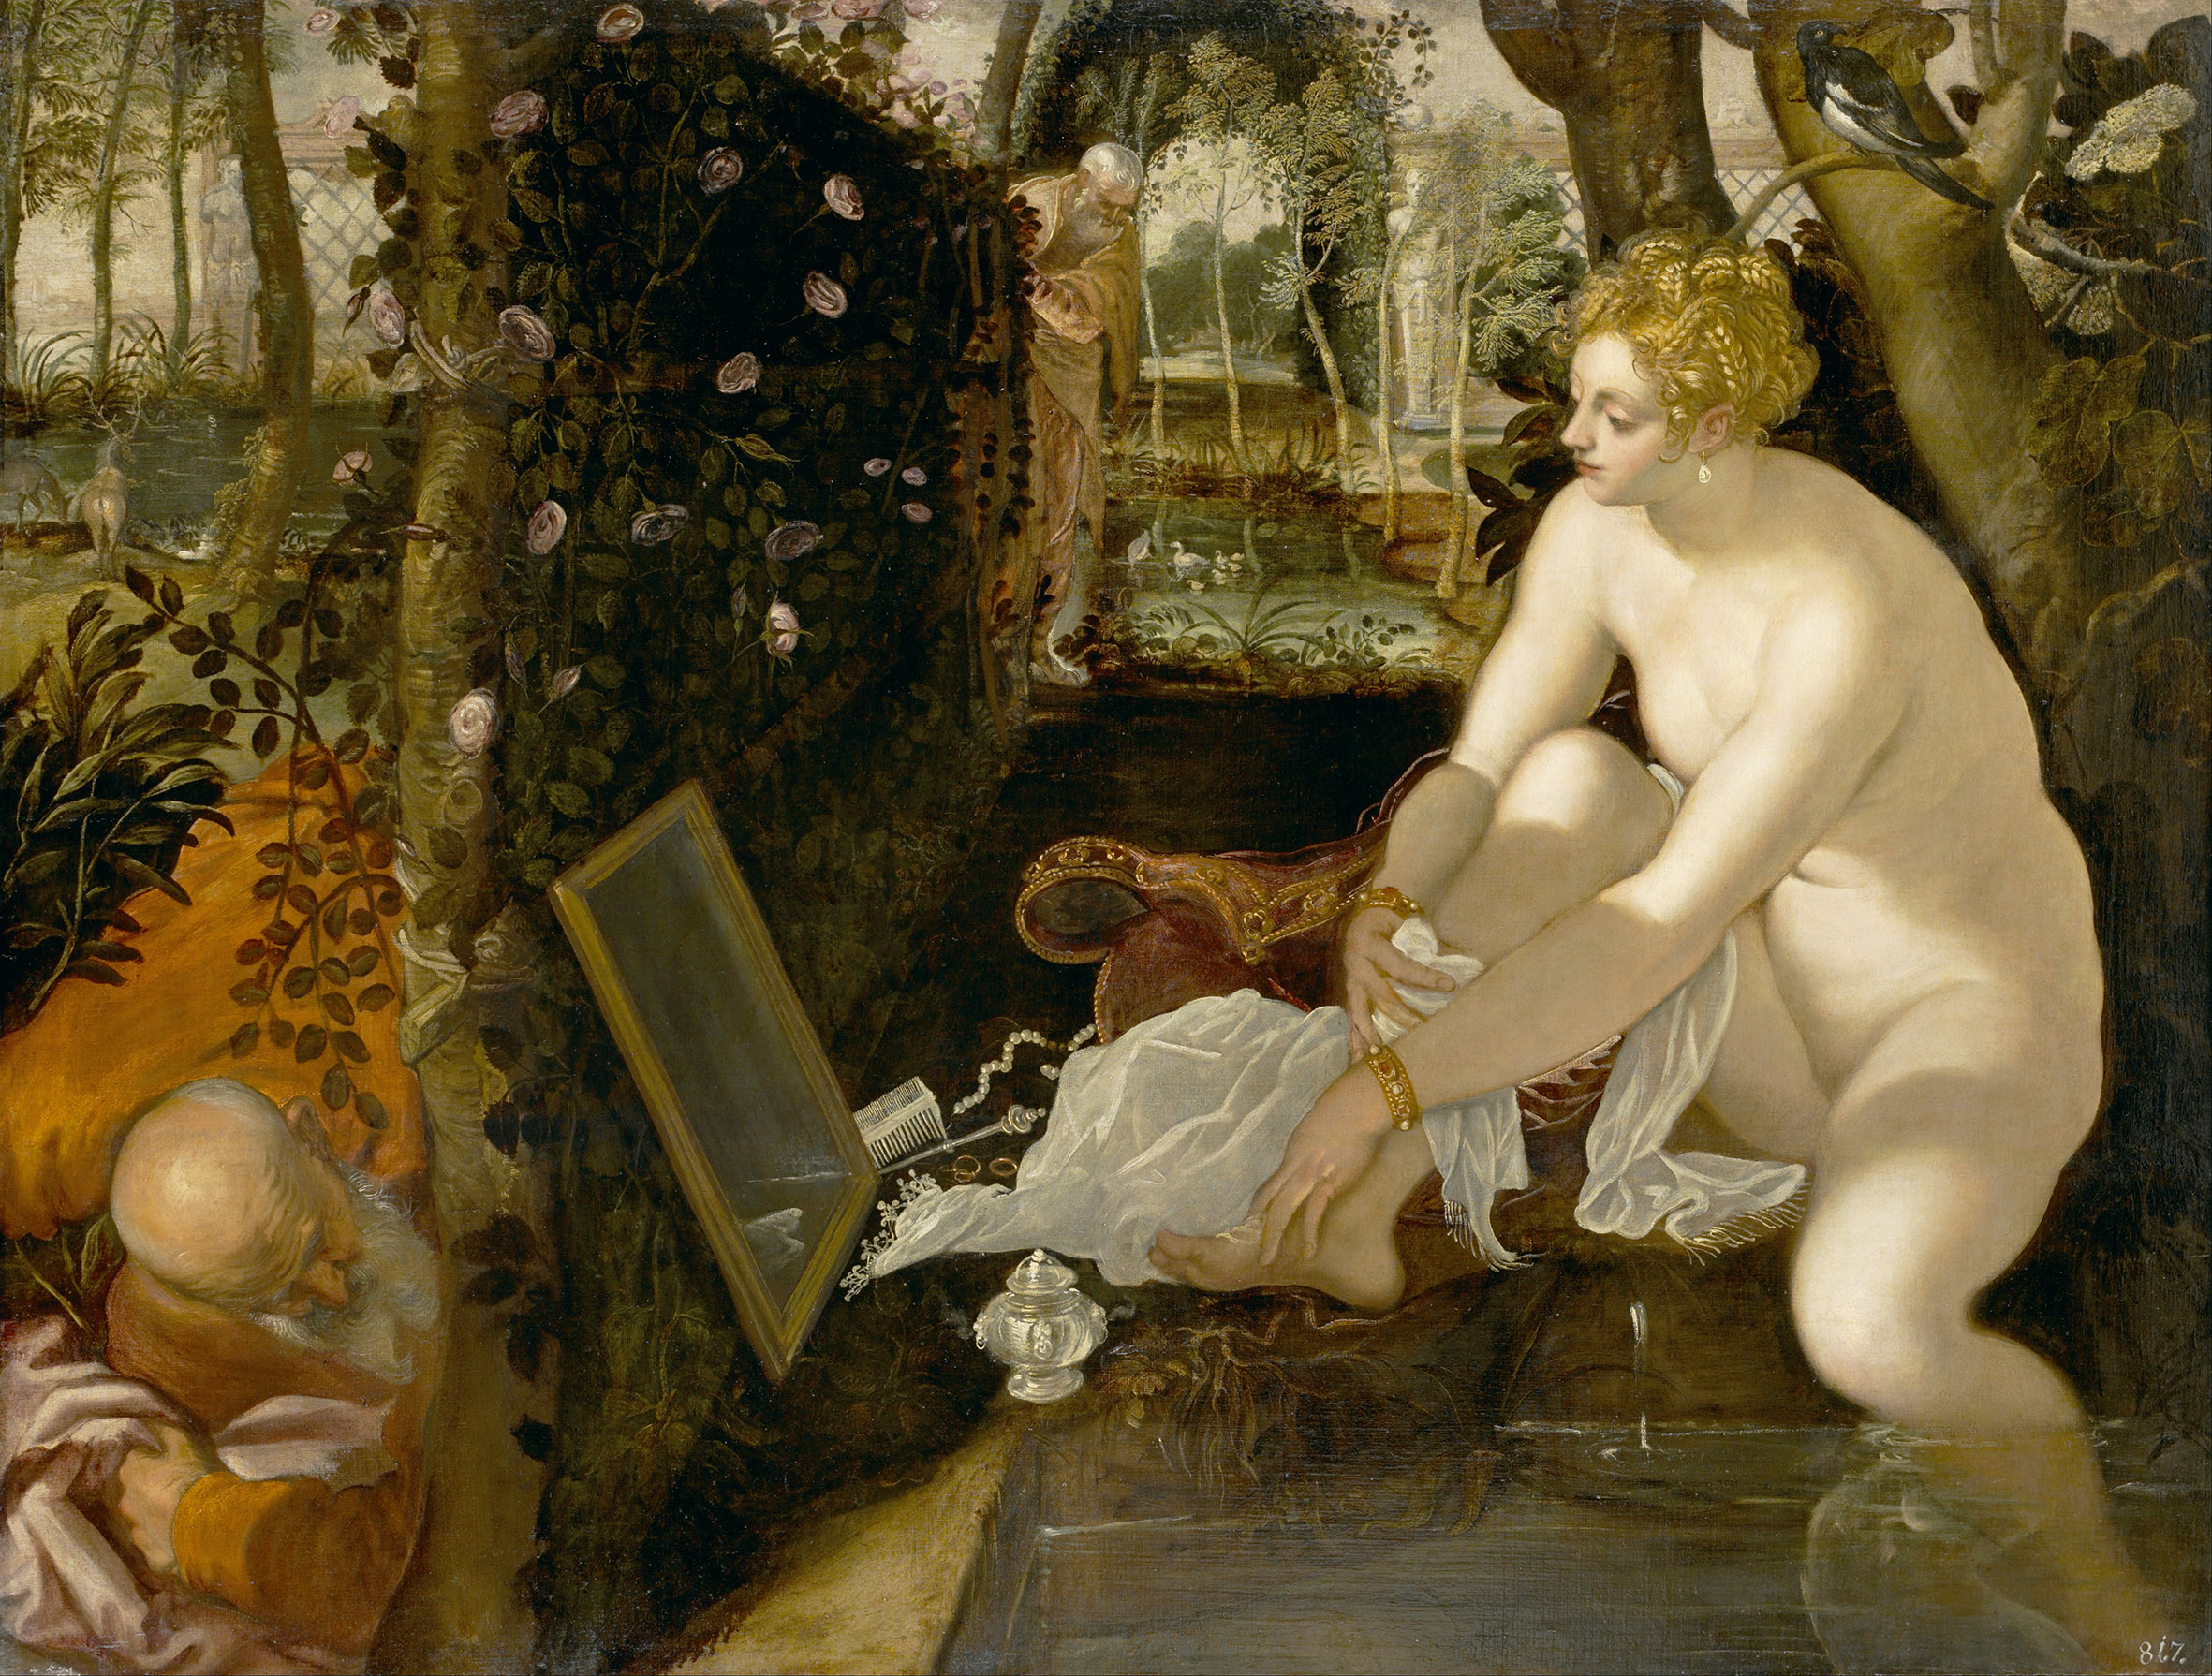 Venus in Childbirth